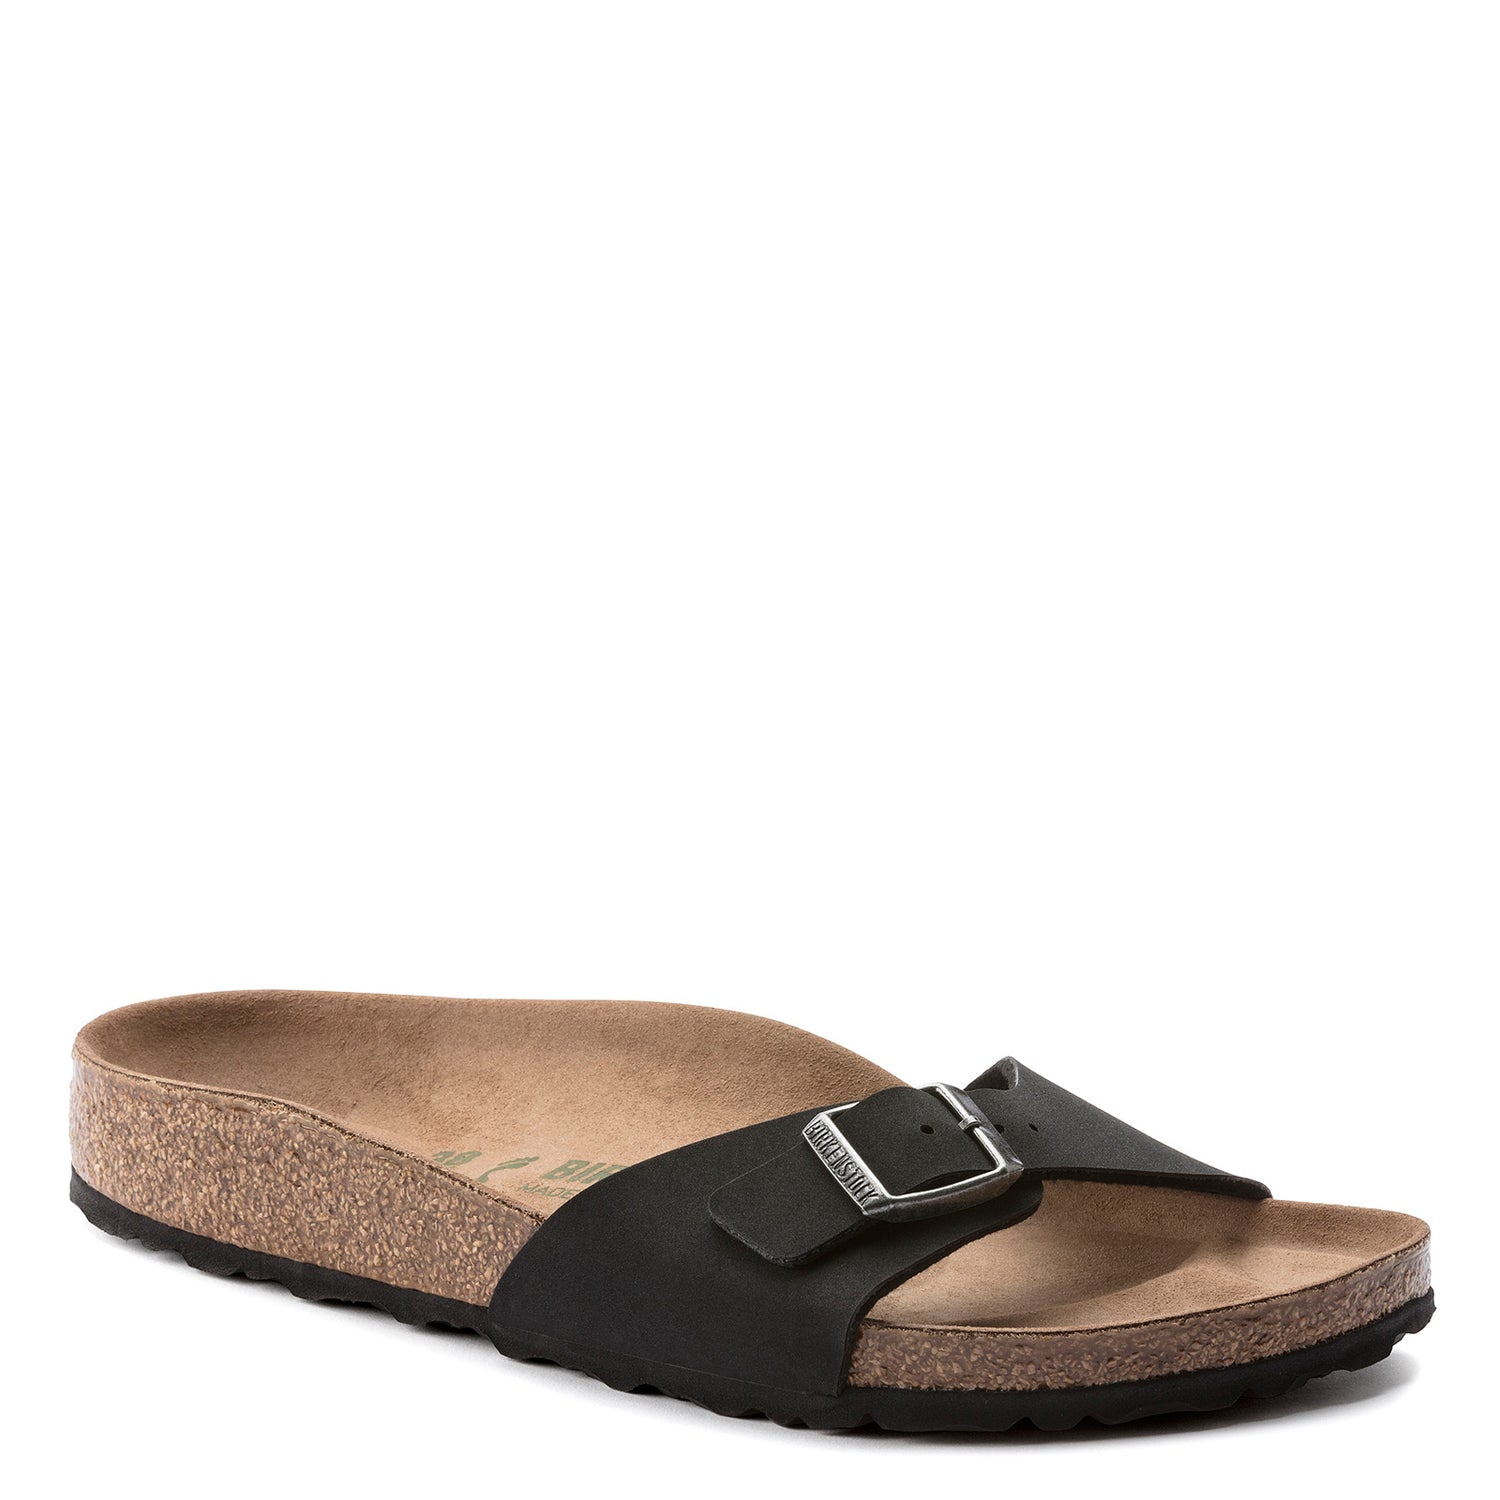 Peltz Shoes  Women's Birkenstock Madrid Vegan Sandal - Narrow Fit BLACK 1020 060 N